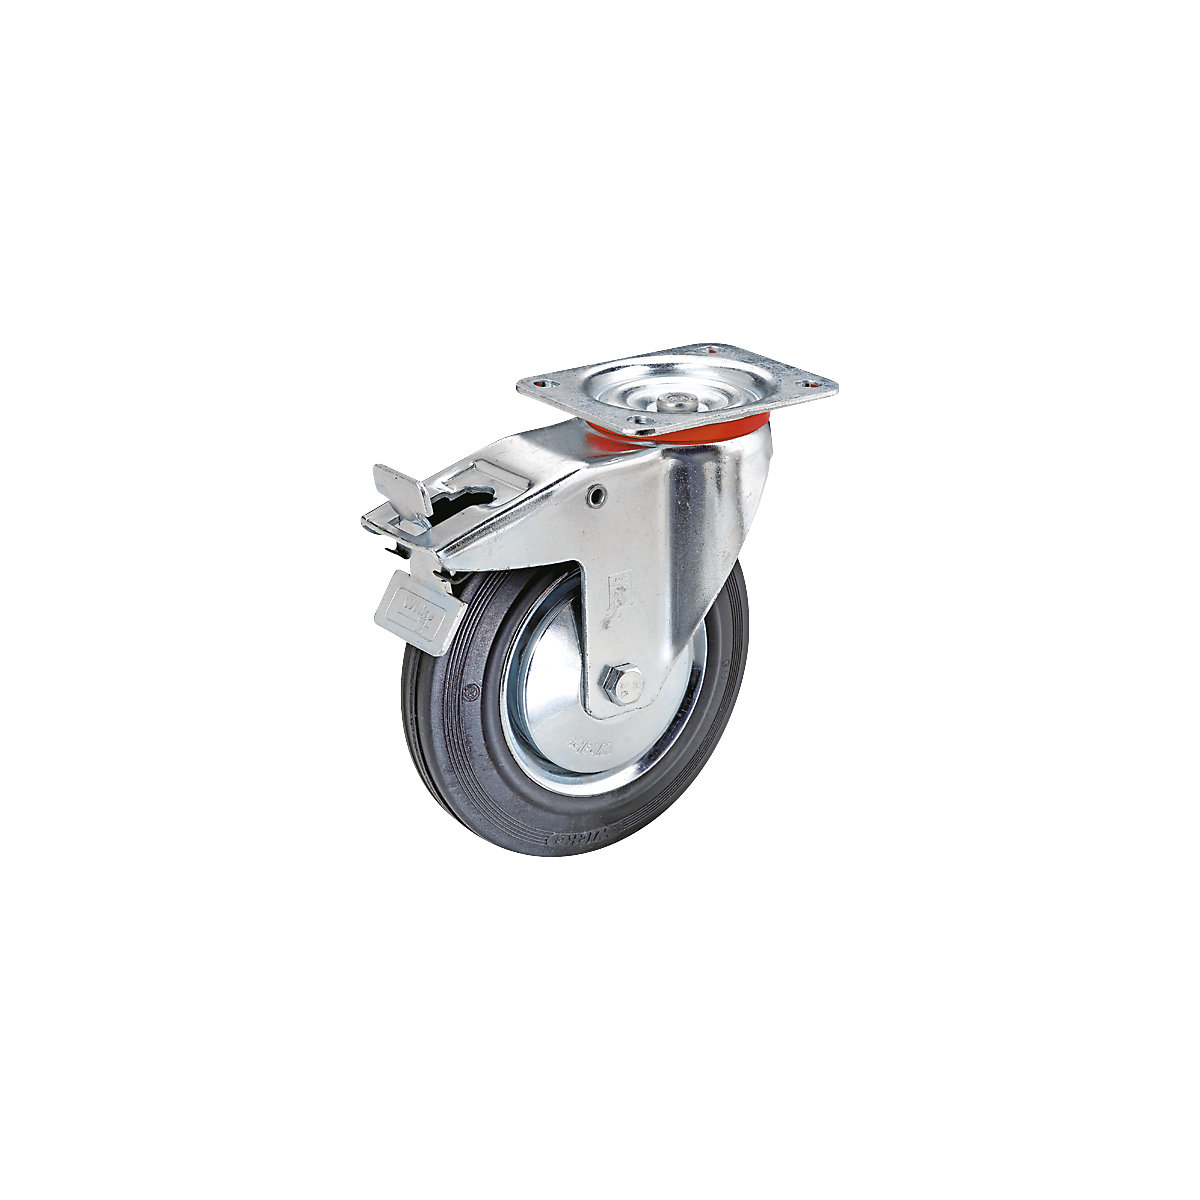 Vollgummi-Reifen auf Stahlblech-Felge, Rad-Ø x Breite 250 x 60 mm, Lenkrolle mit Doppelstopp-3